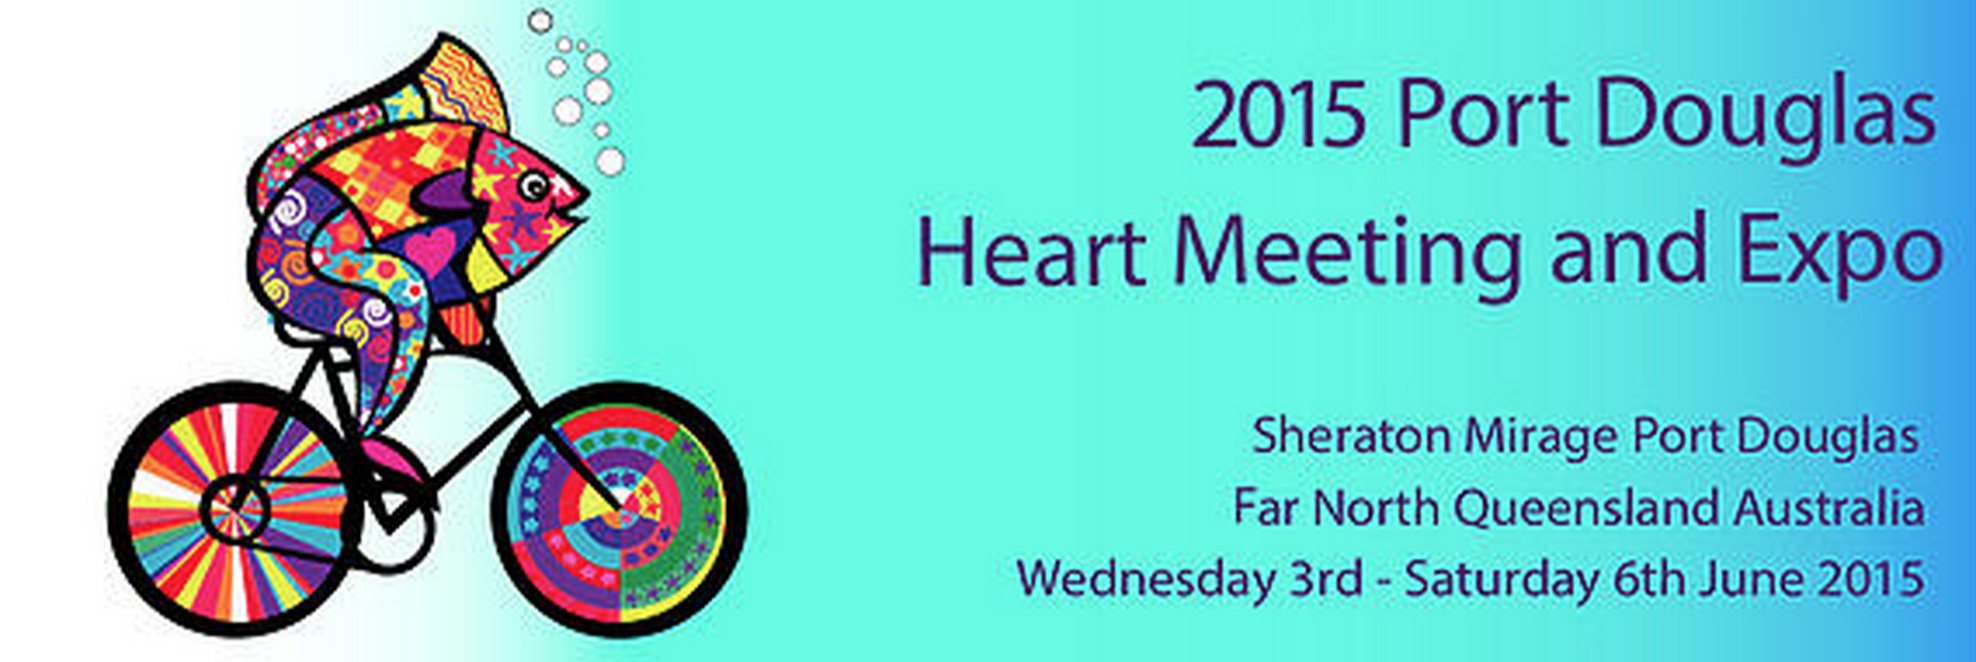 2015 Port Douglas Heart Meeting Blog